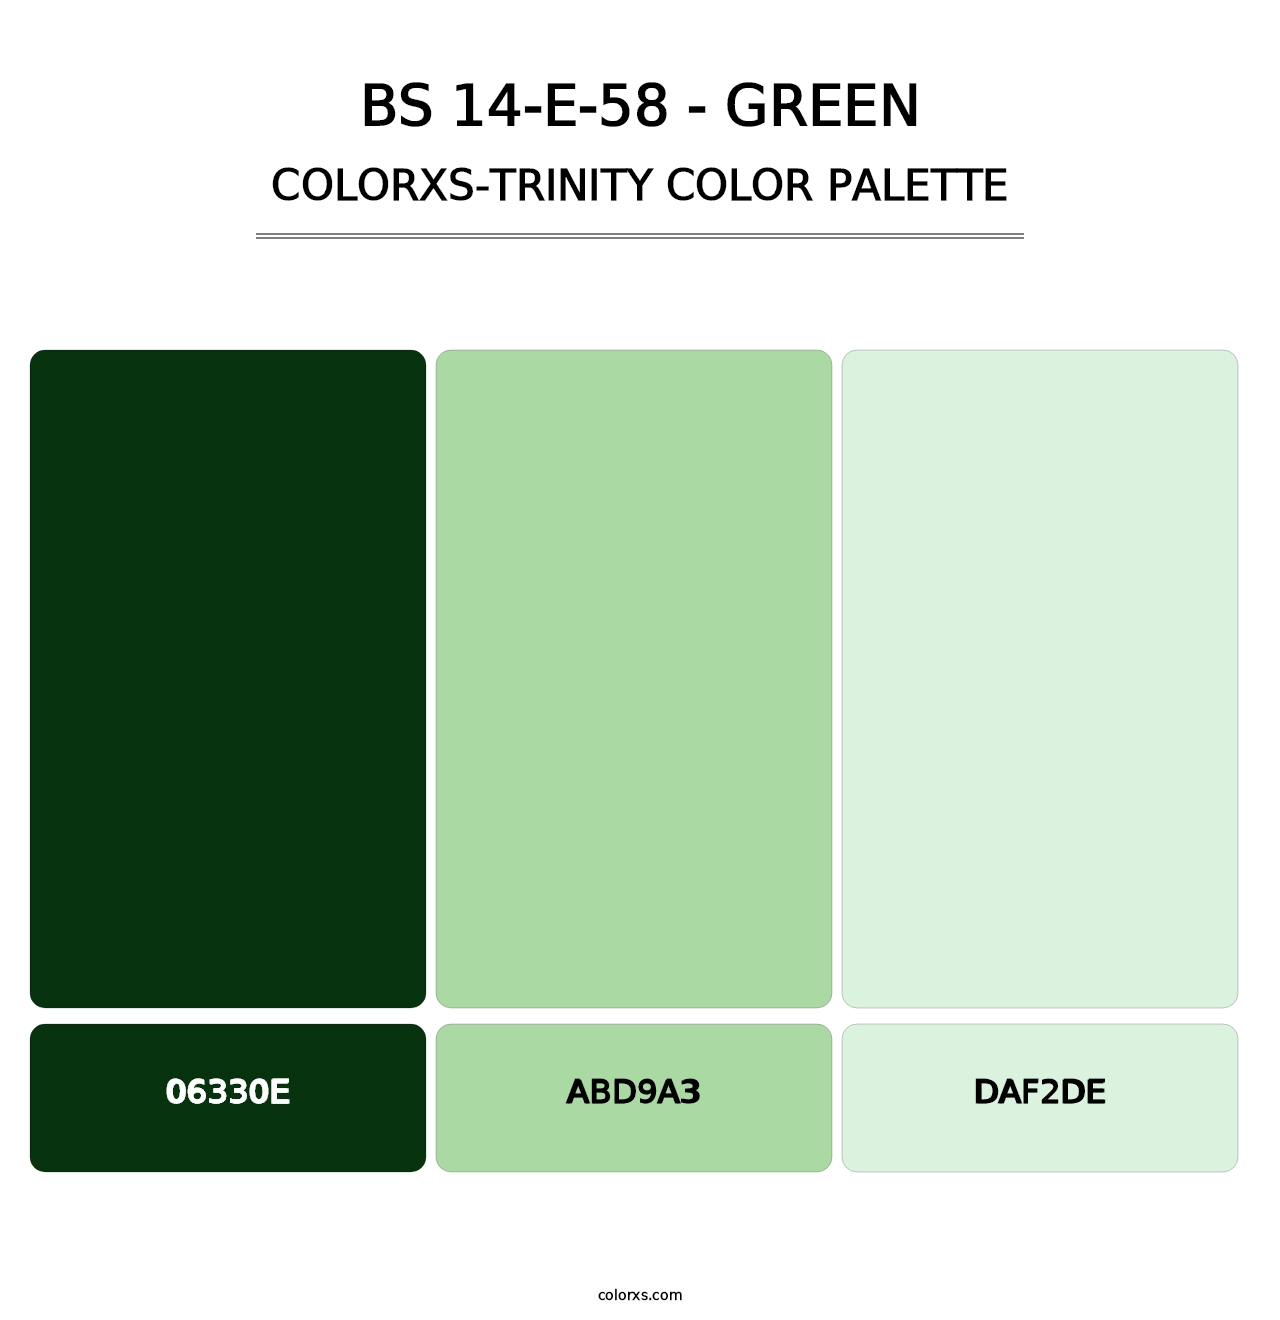 BS 14-E-58 - Green - Colorxs Trinity Palette